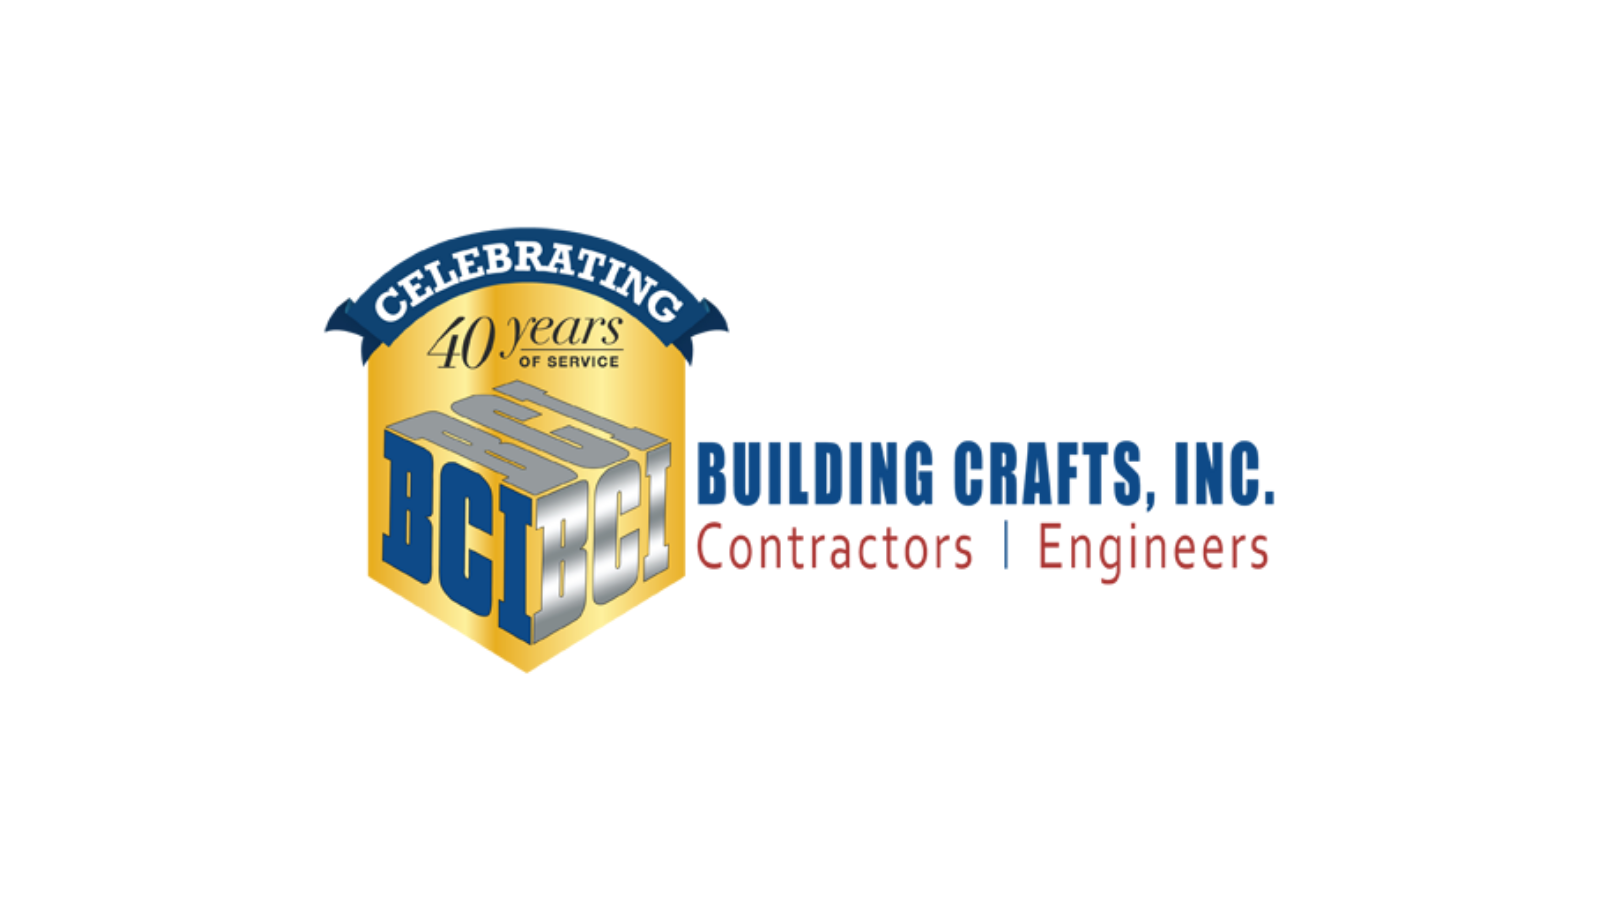 Building Crafts, Inc